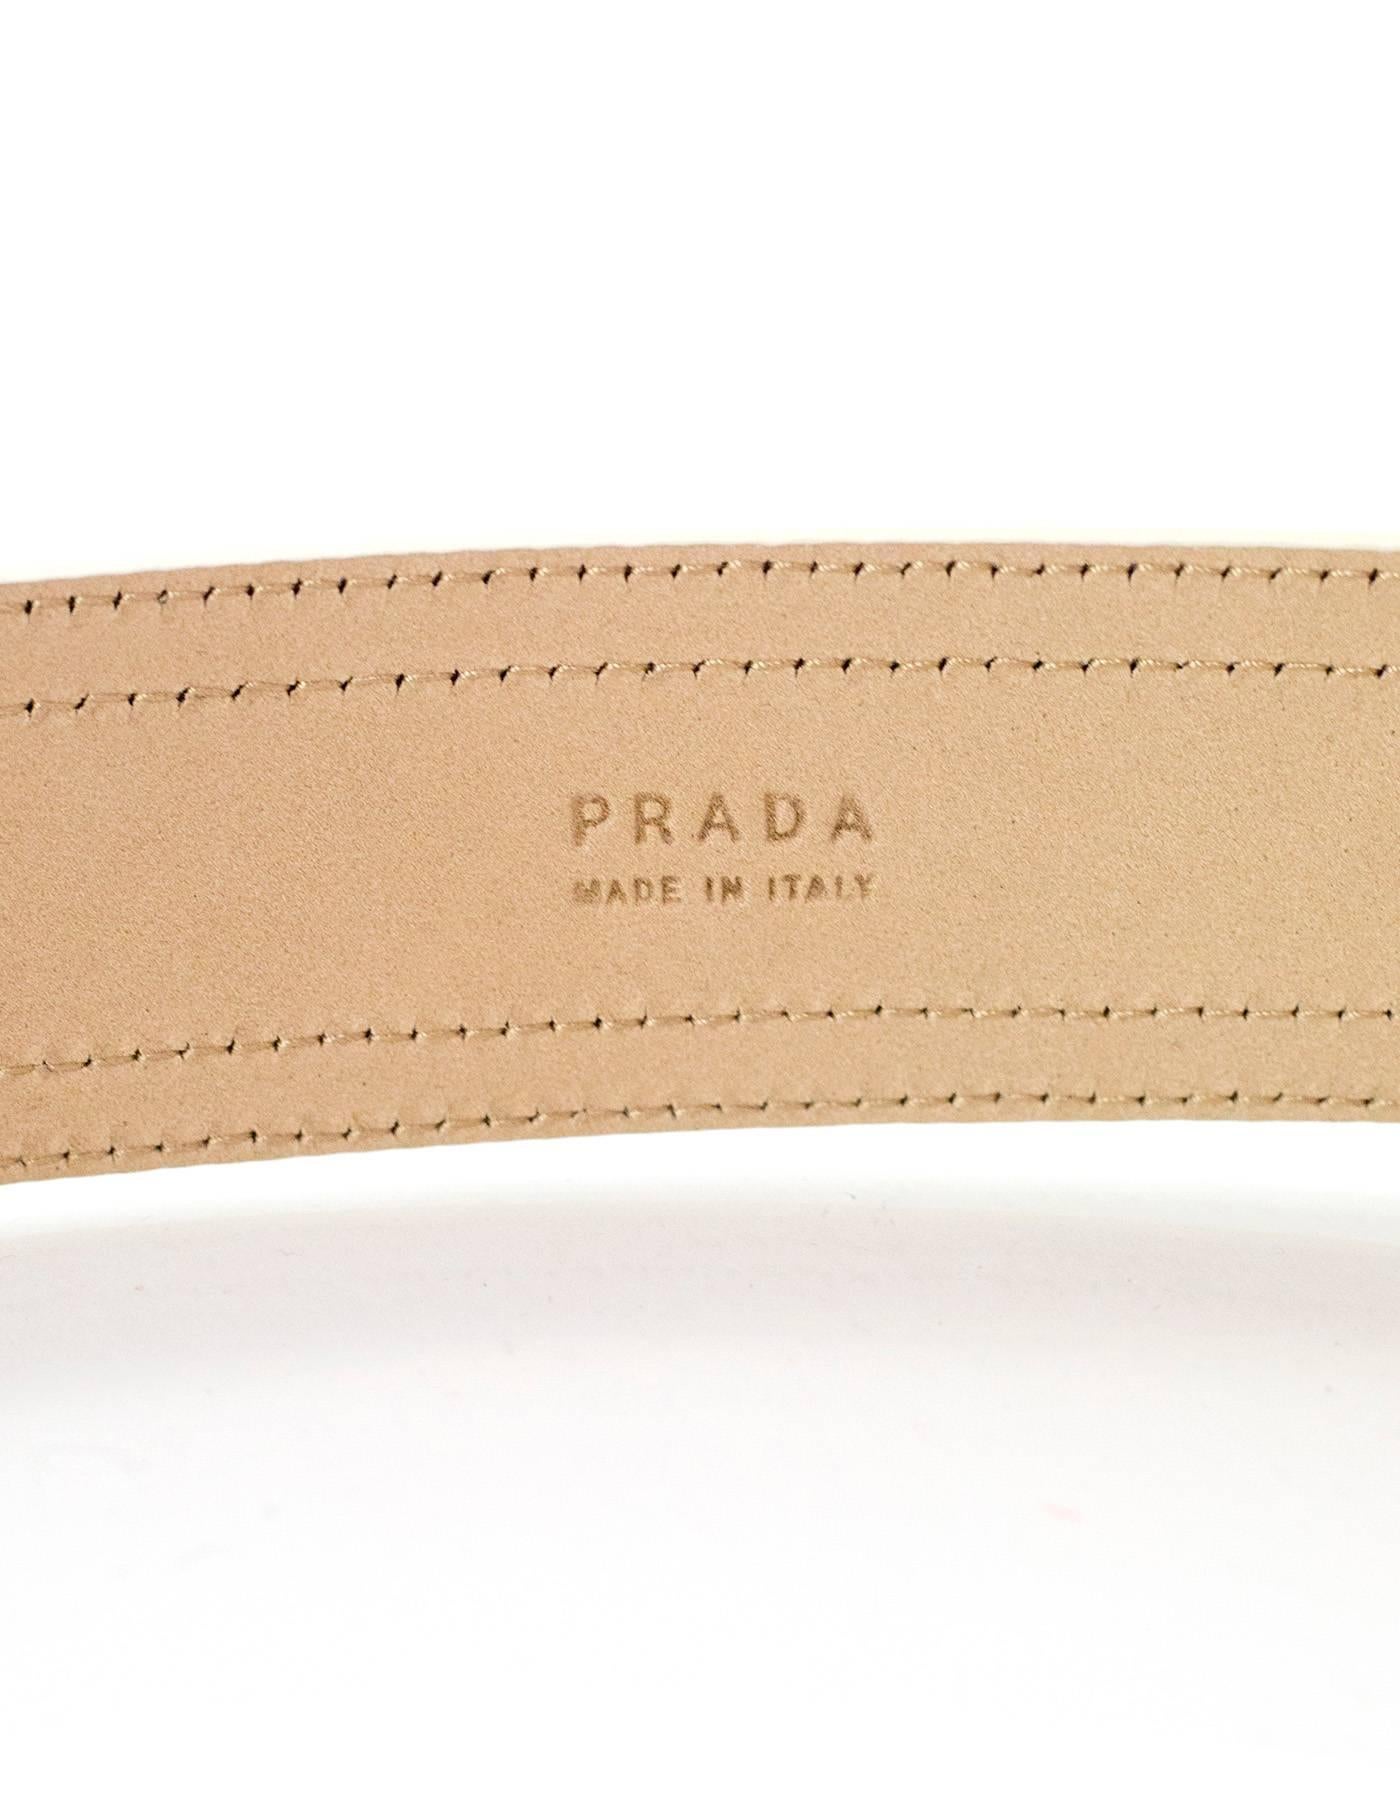 Prada Cream Patent Leather Ombre Belt sz 90 1